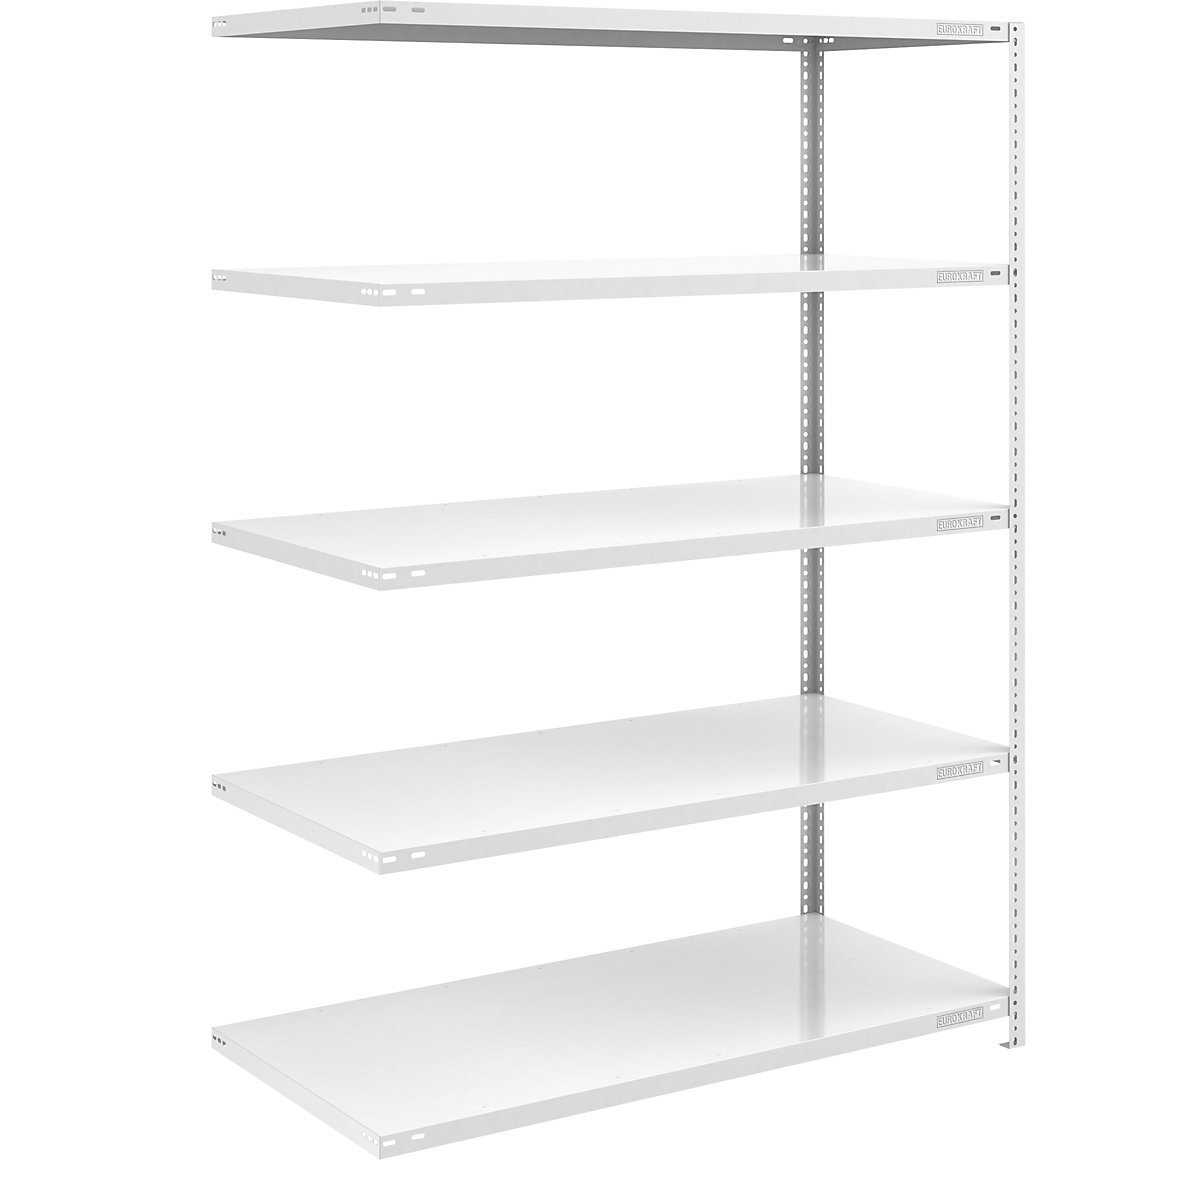 Bolt-together shelf unit, light duty, plastic coated – eurokraft pro, shelf unit height 2000 mm, shelf width 1300 mm, depth 800 mm, extension shelf unit-6